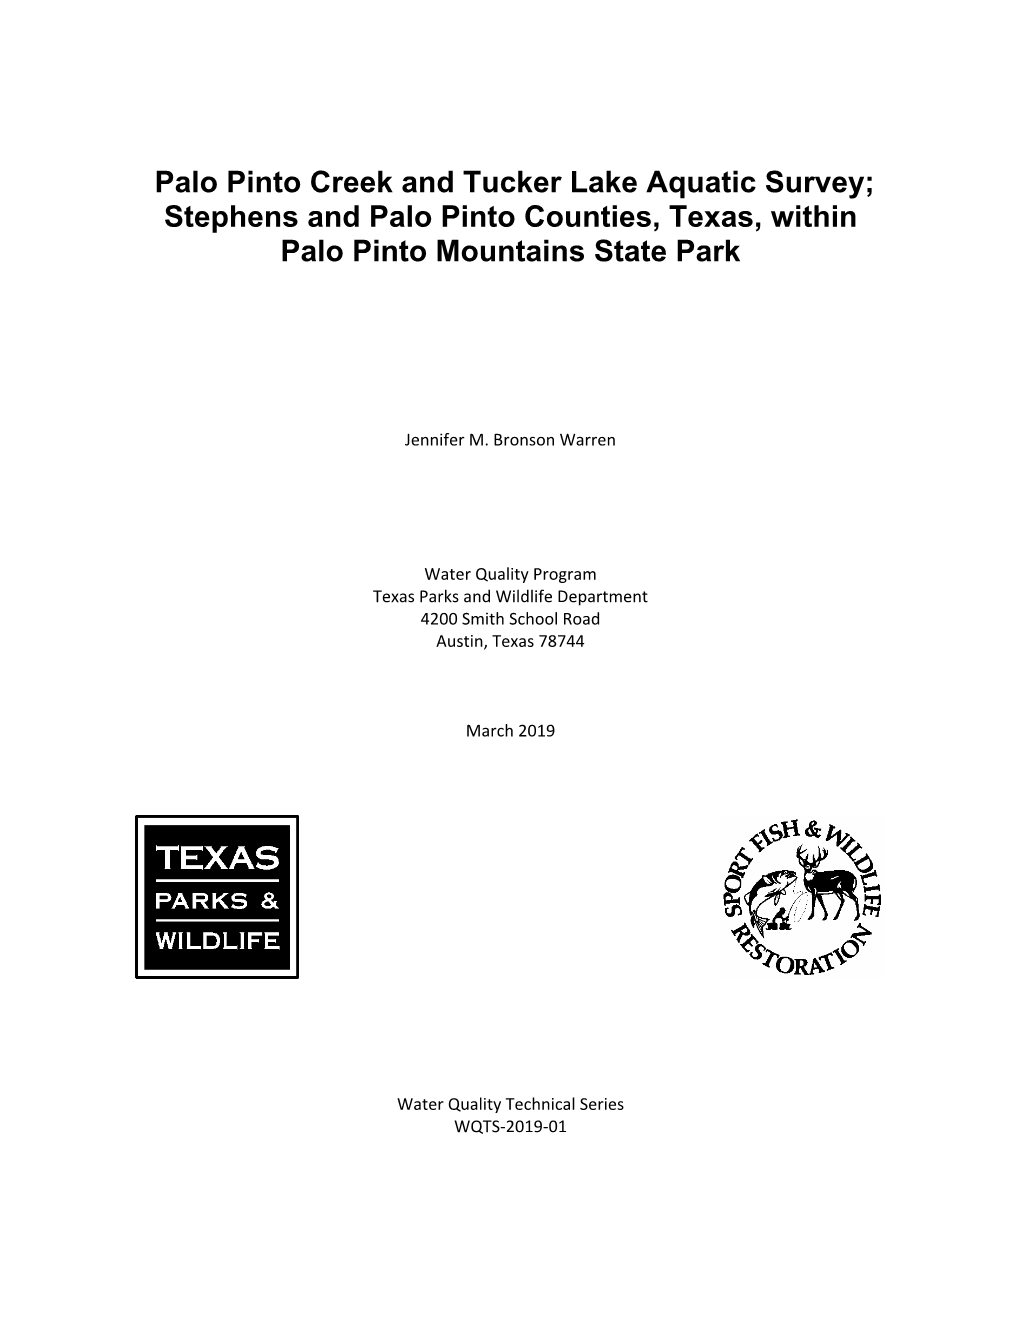 Palo Pinto Creek and Tucker Lake Aquatic Survey; Stephens and Palo Pinto Counties, Texas, Within Palo Pinto Mountains State Park